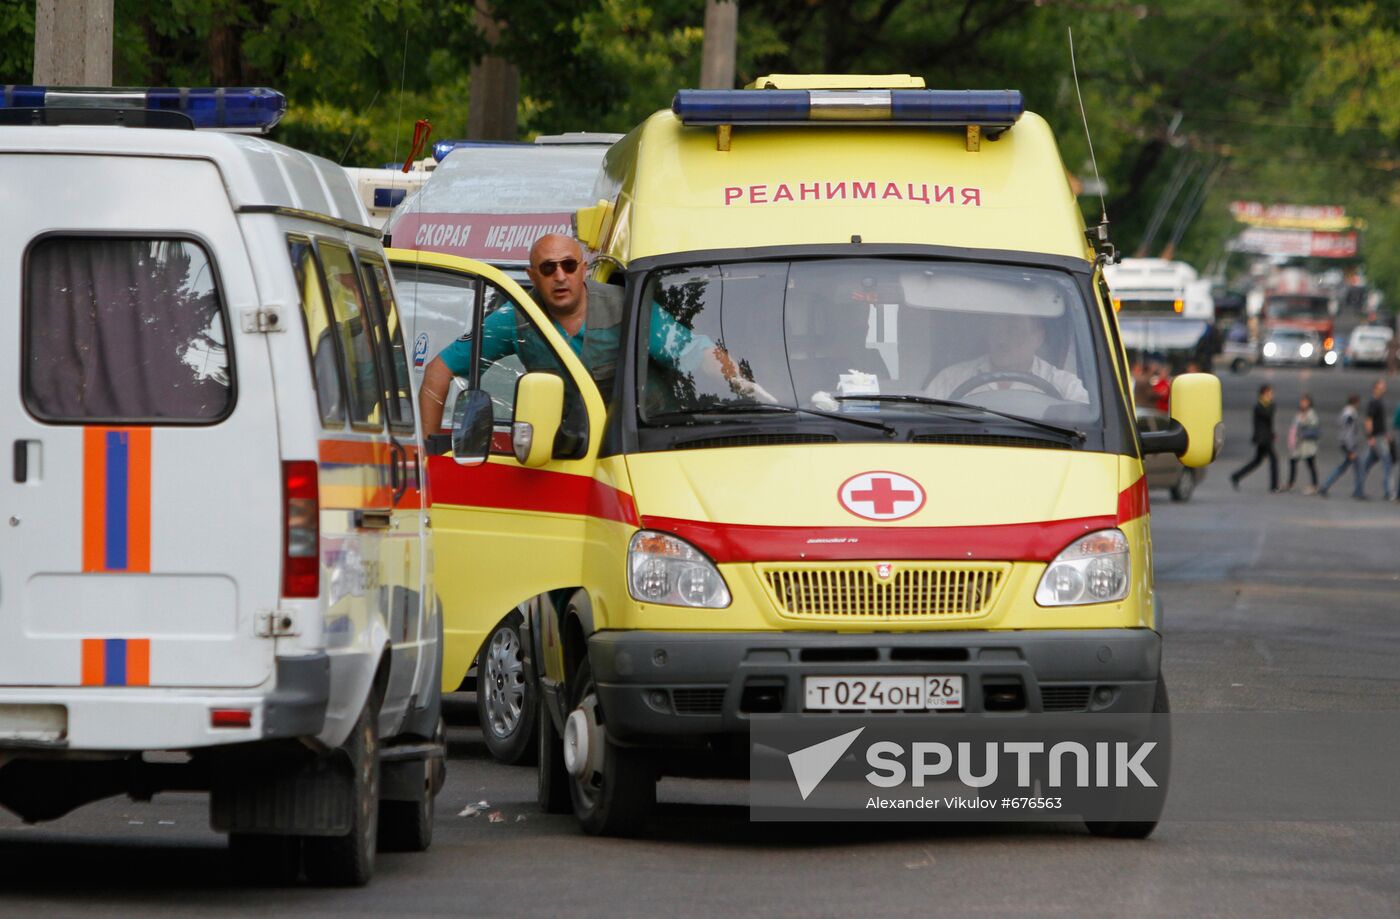 Ambulances at explosion site